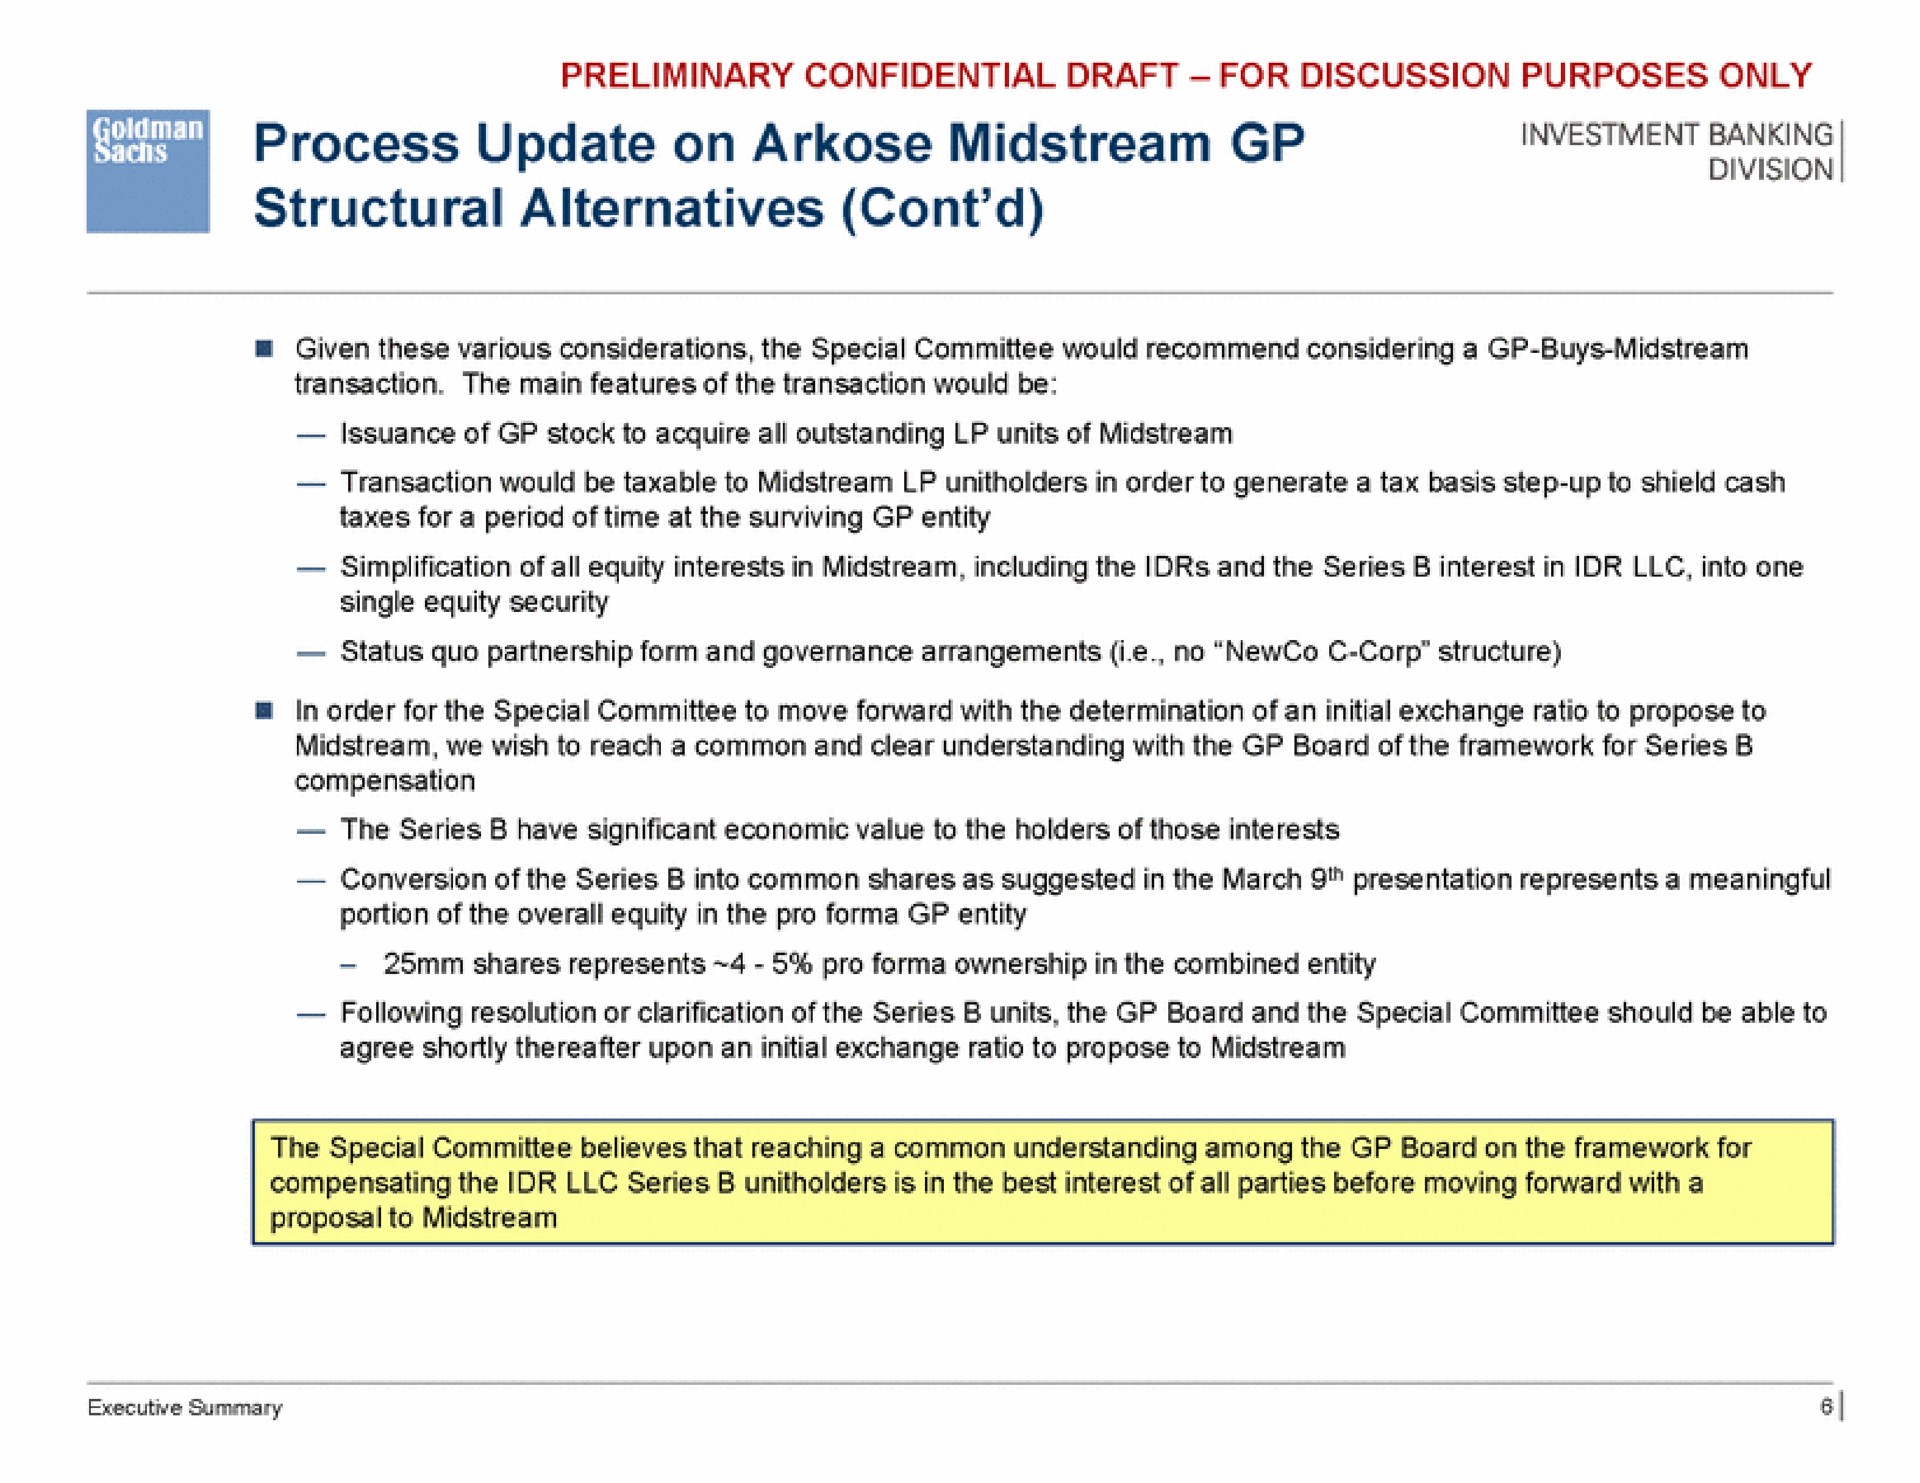 process update on arkose midstream eat structural alternatives | Goldman Sachs